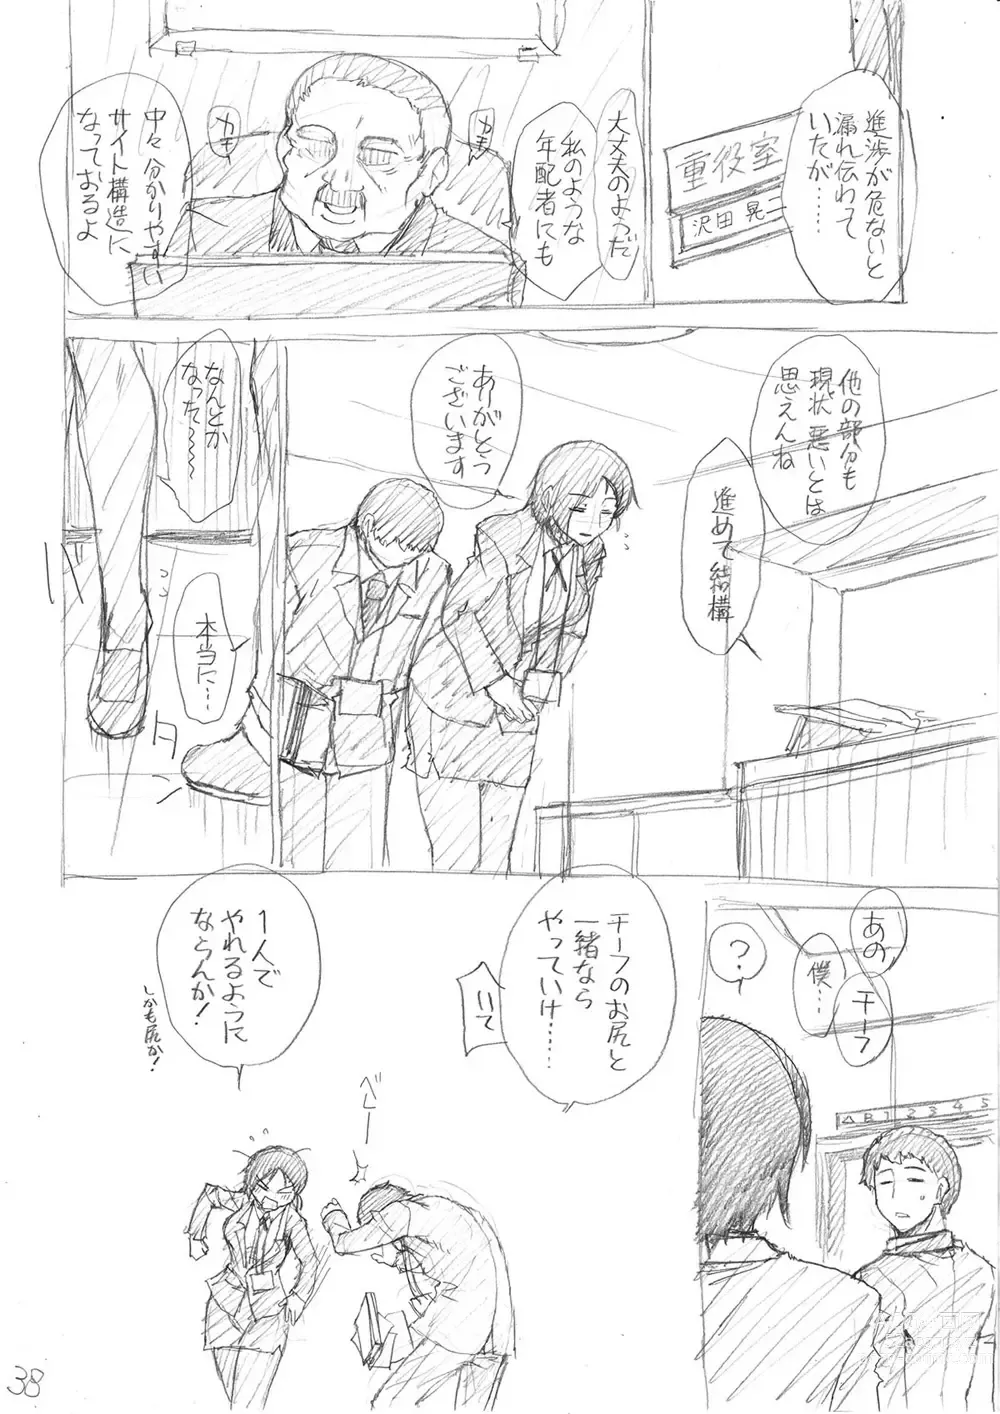 Page 238 of manga Ketsuhara